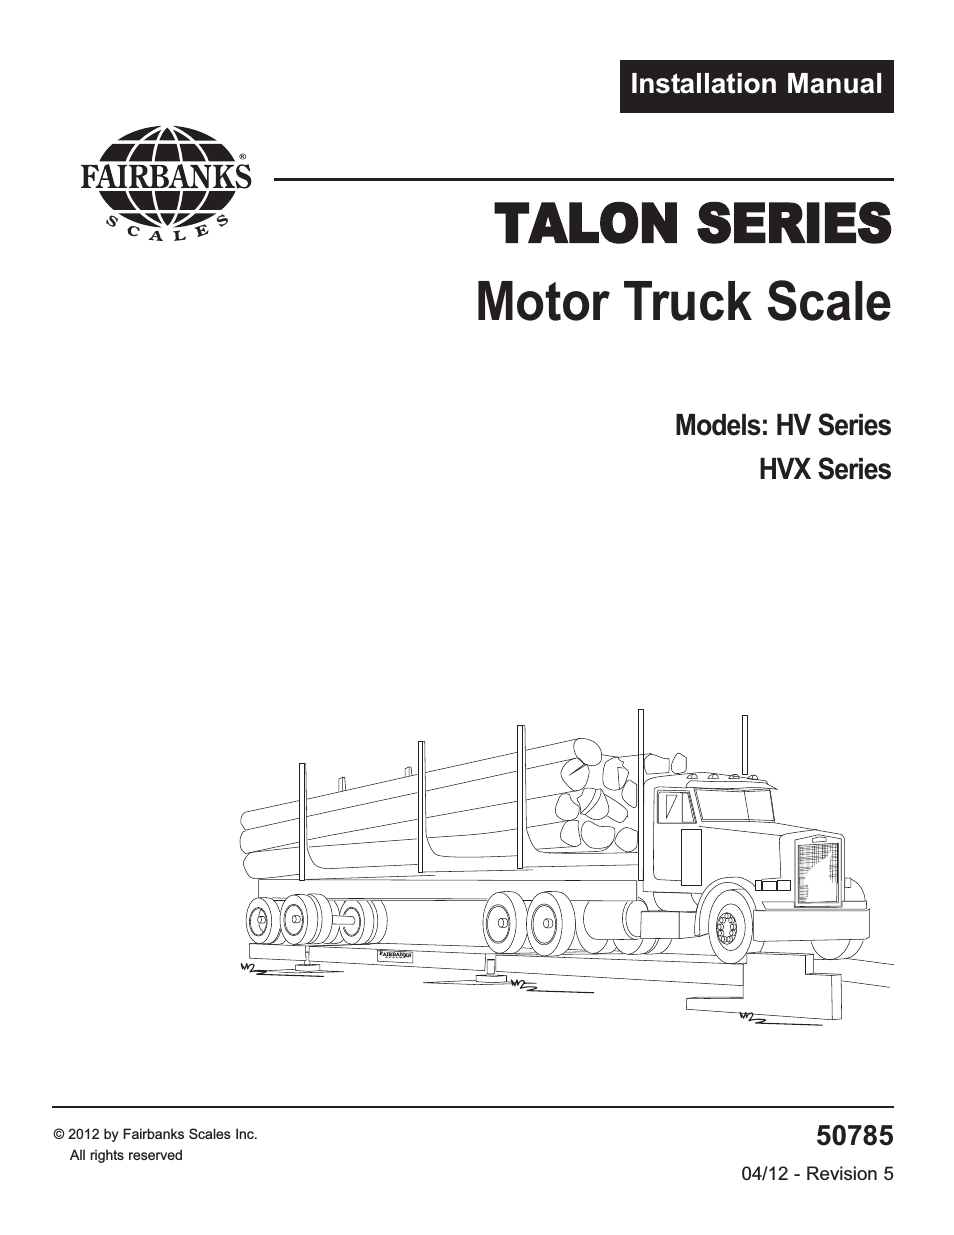 HVX Series TALON SERIES Motor Truck Scale